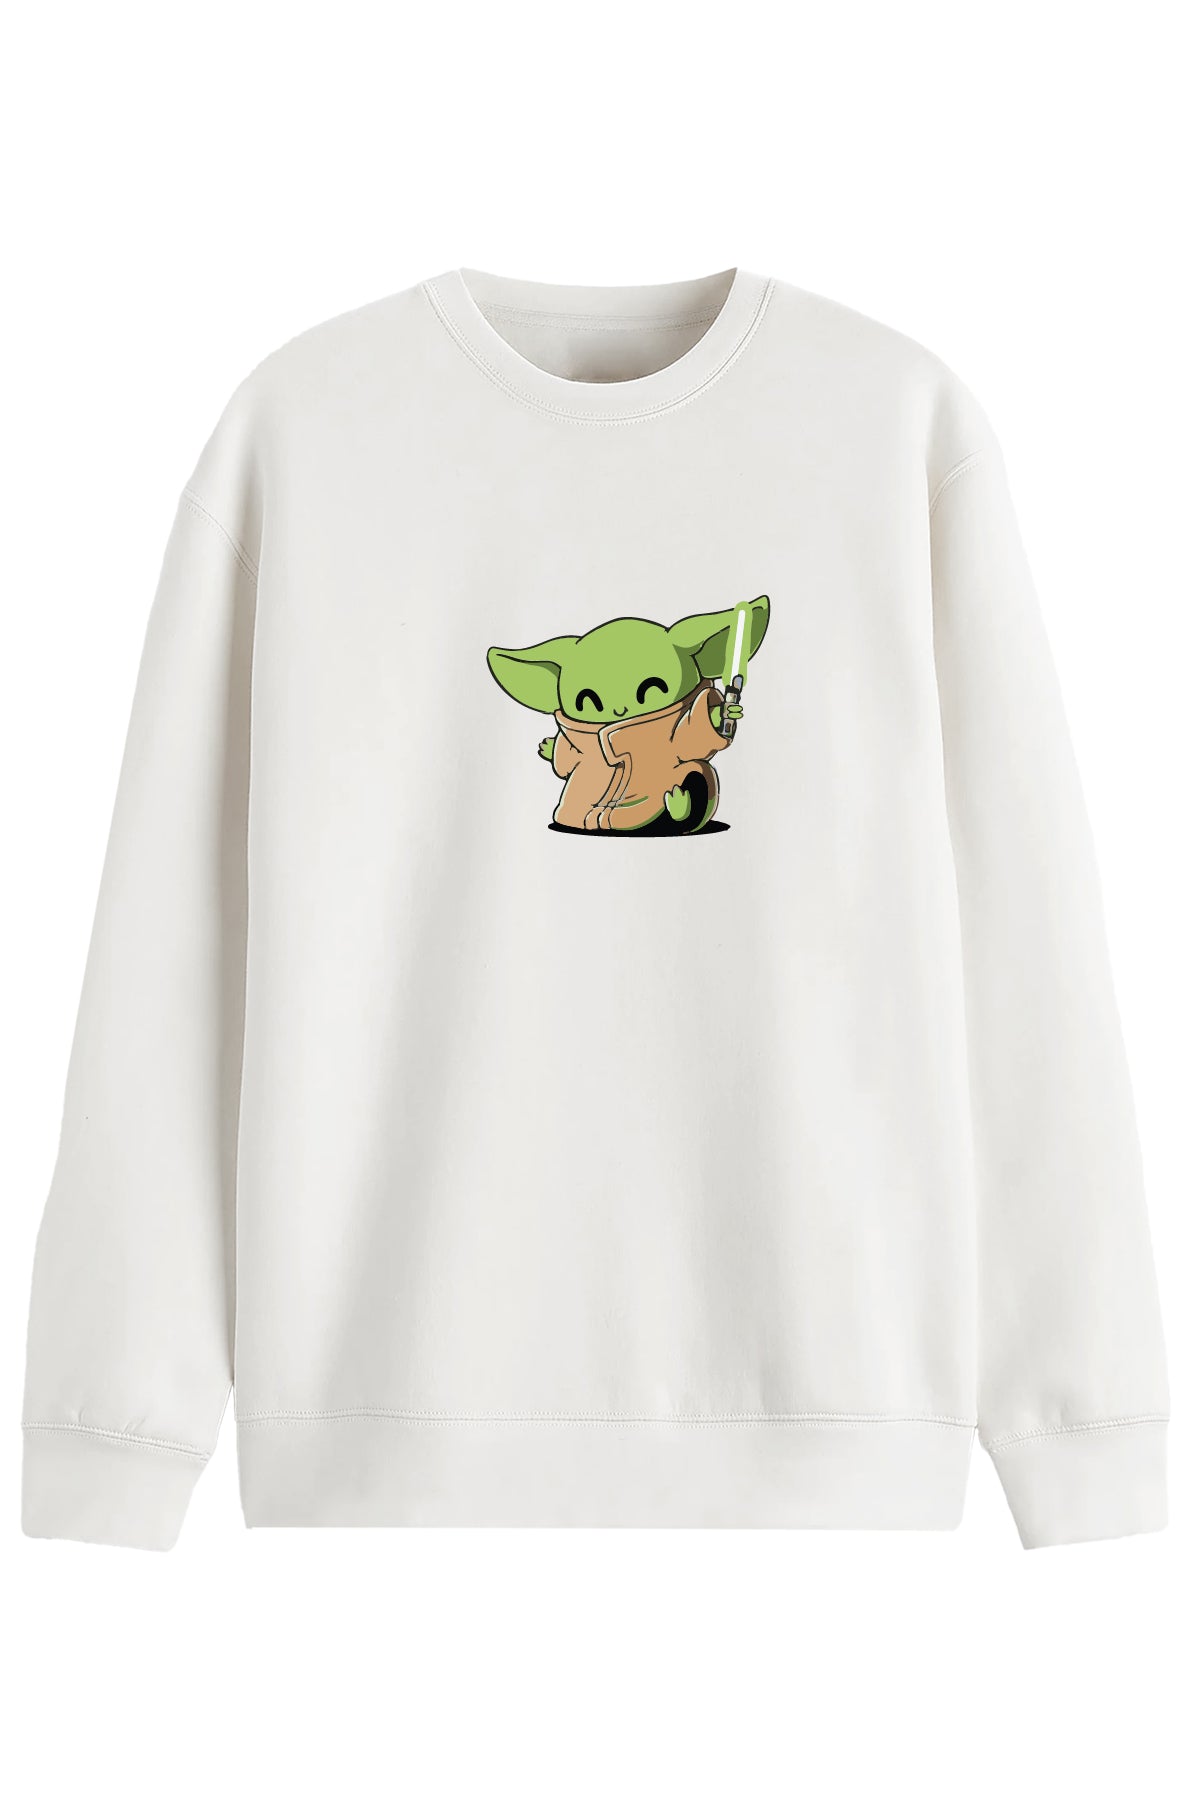 Baby Yoda 2 - Sweatshirt